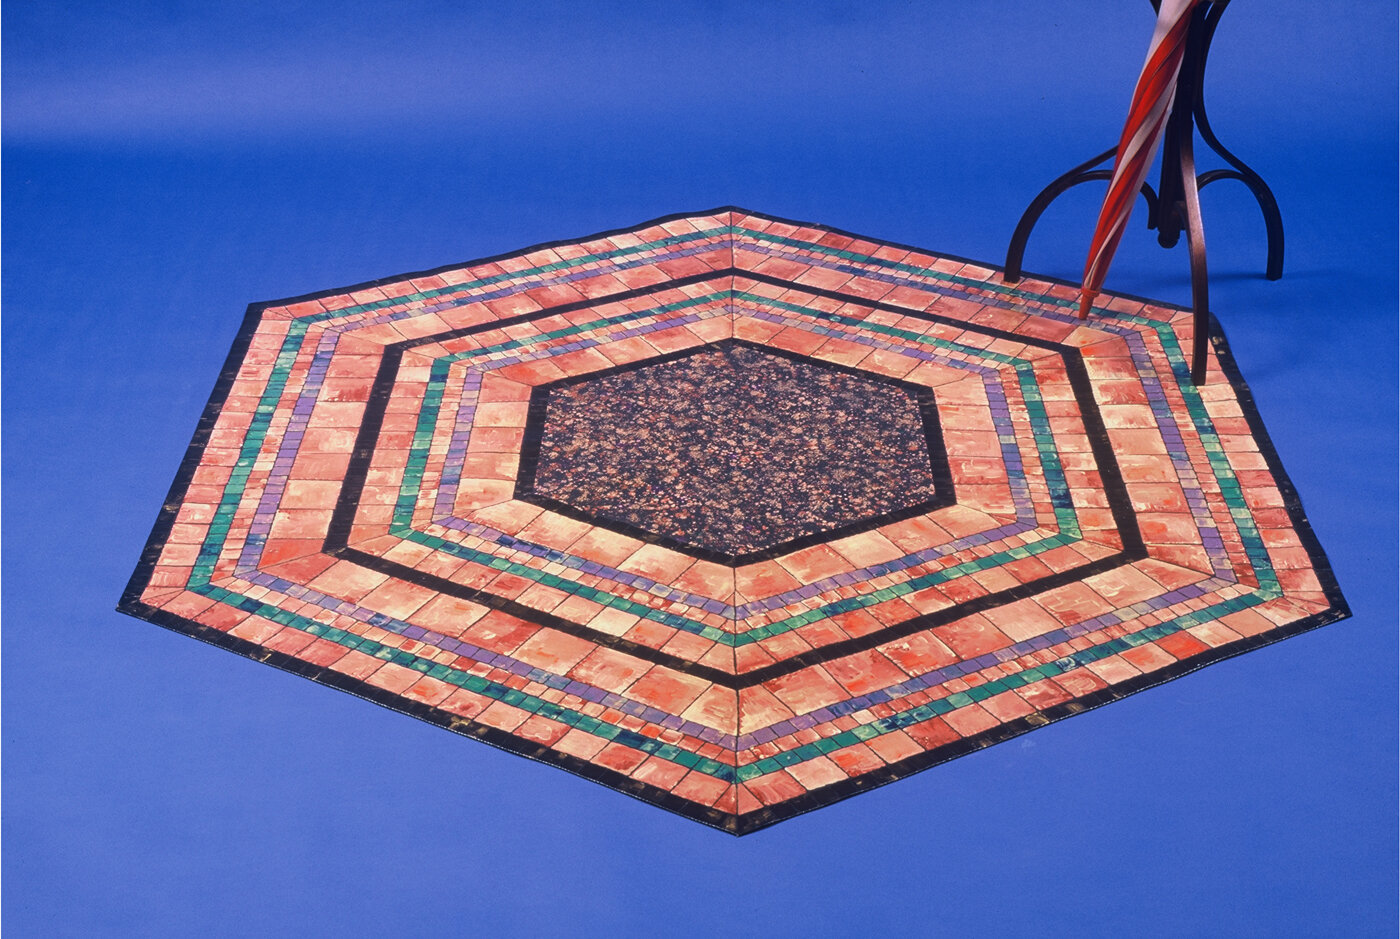   Hex Mosaic  60” diameter  $1,500 